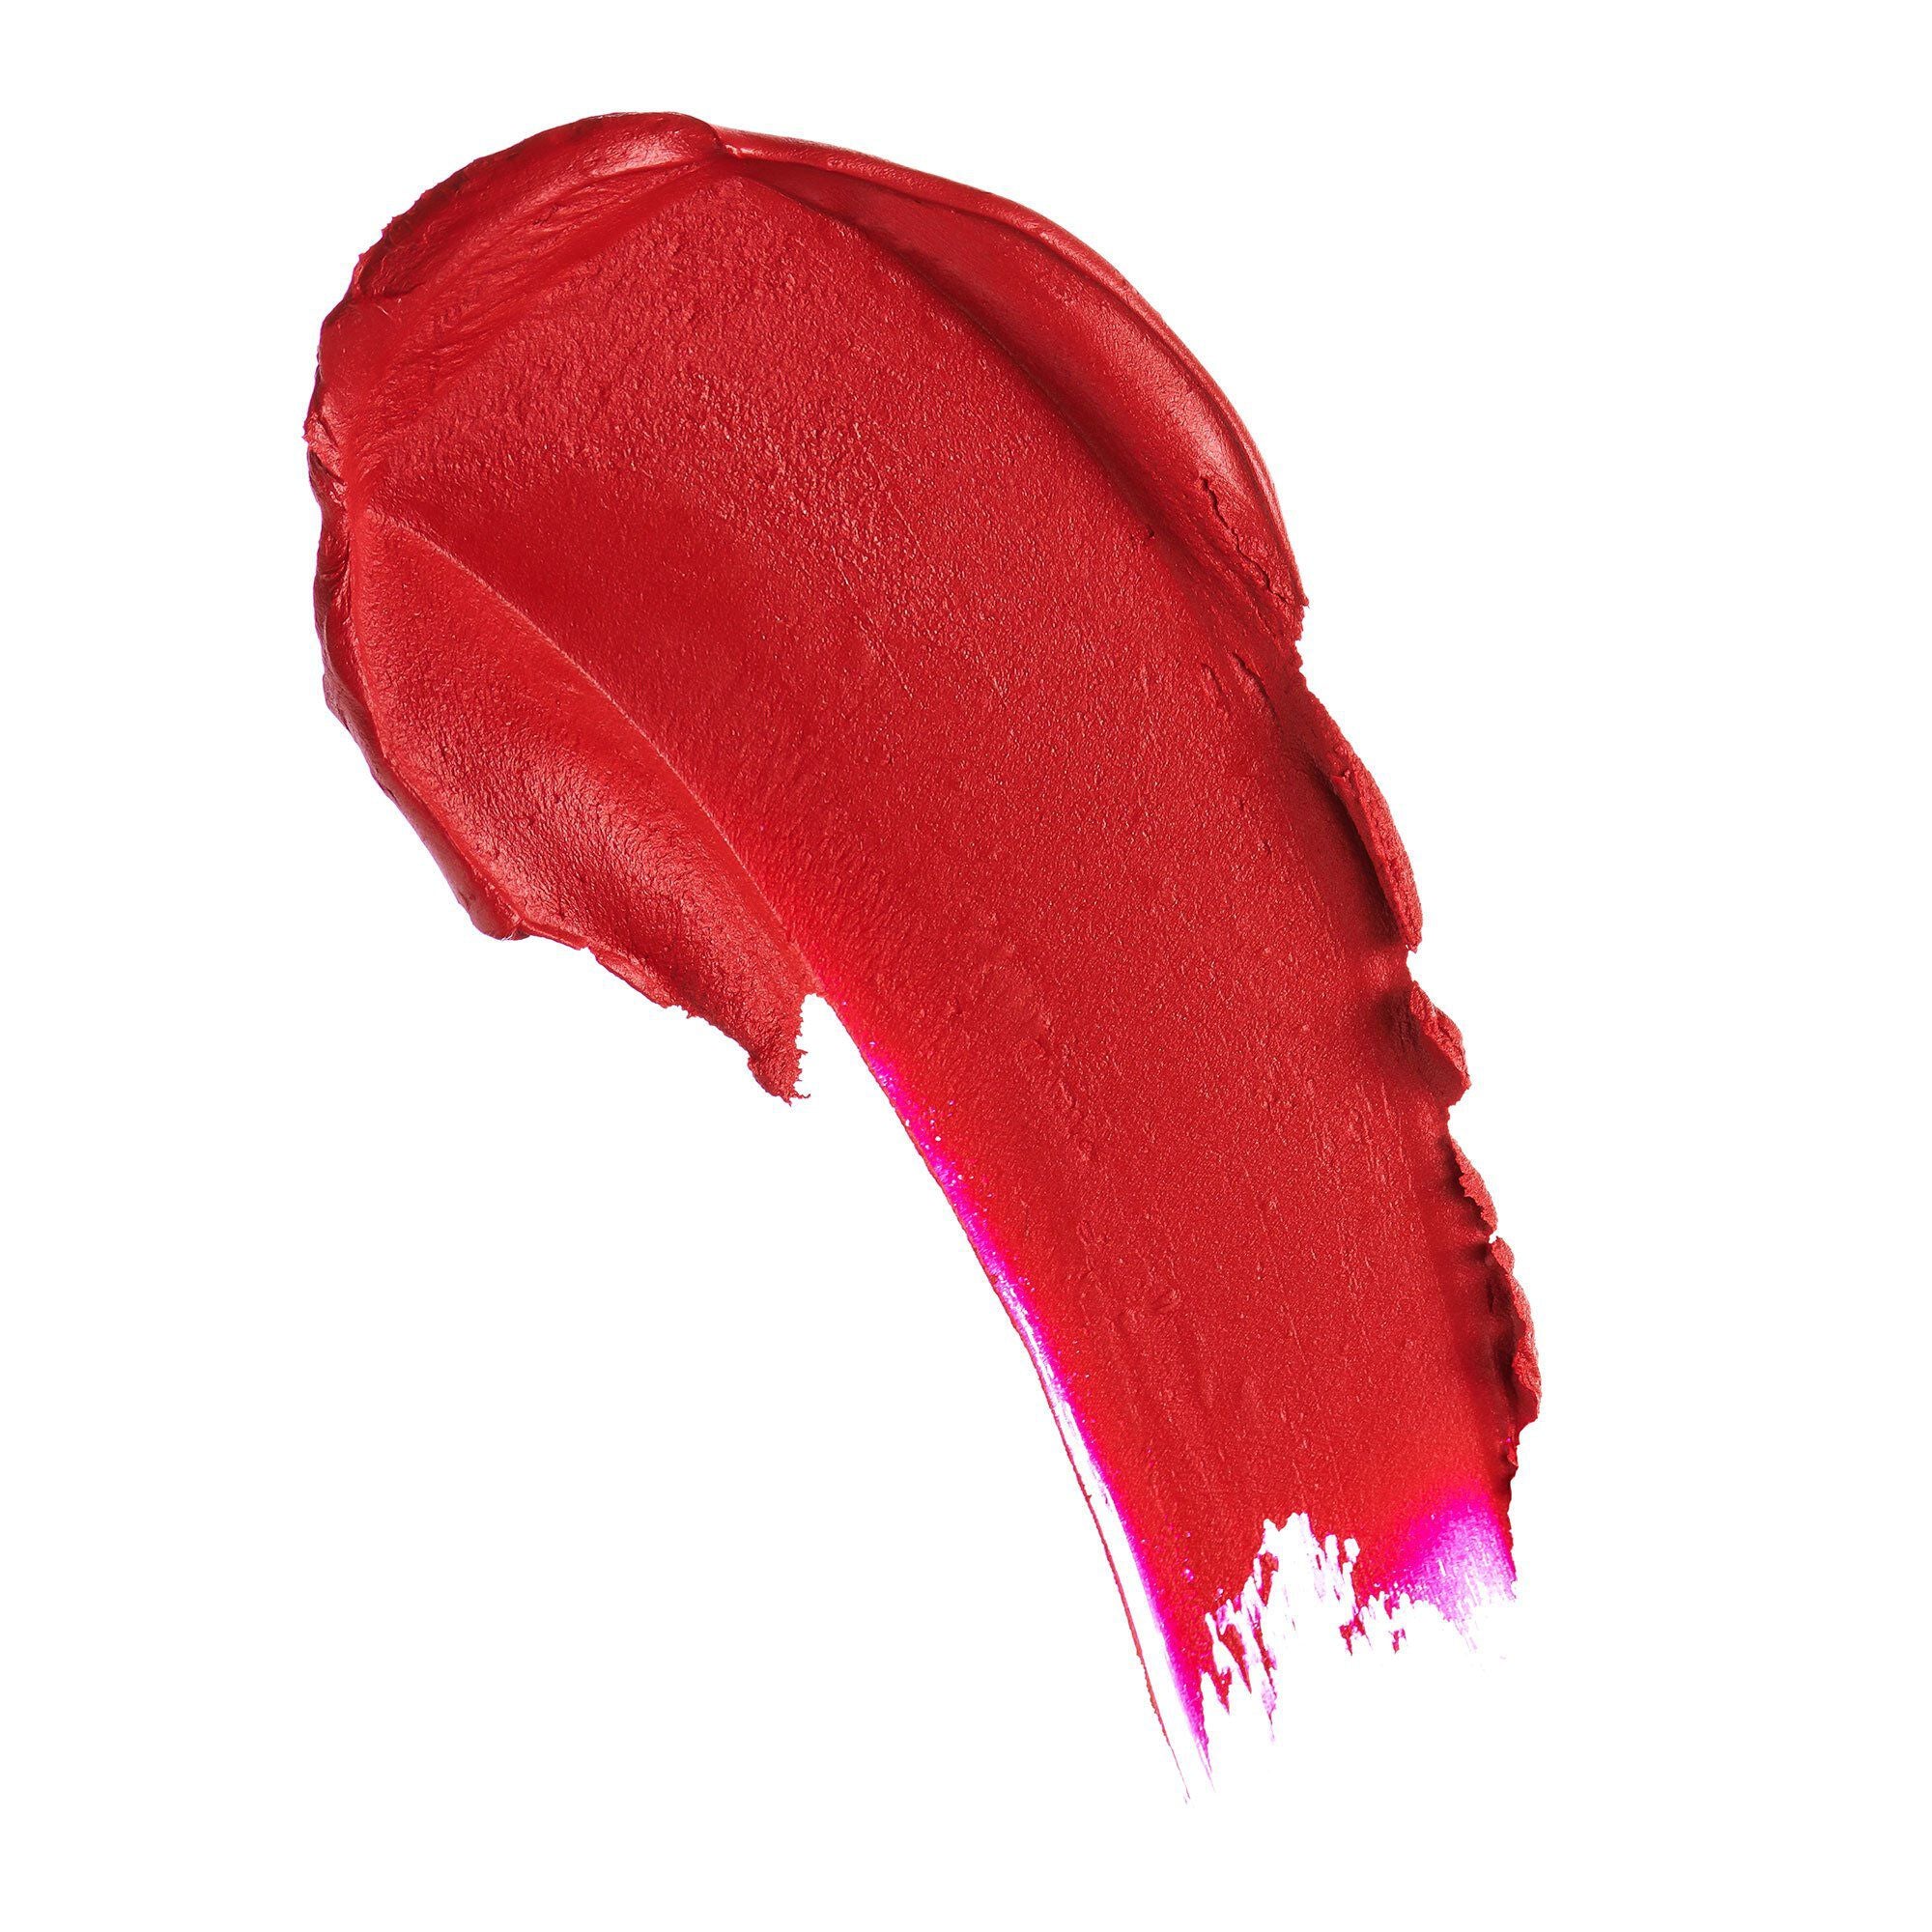 Makeup Revolution Powder Matte Lipstick